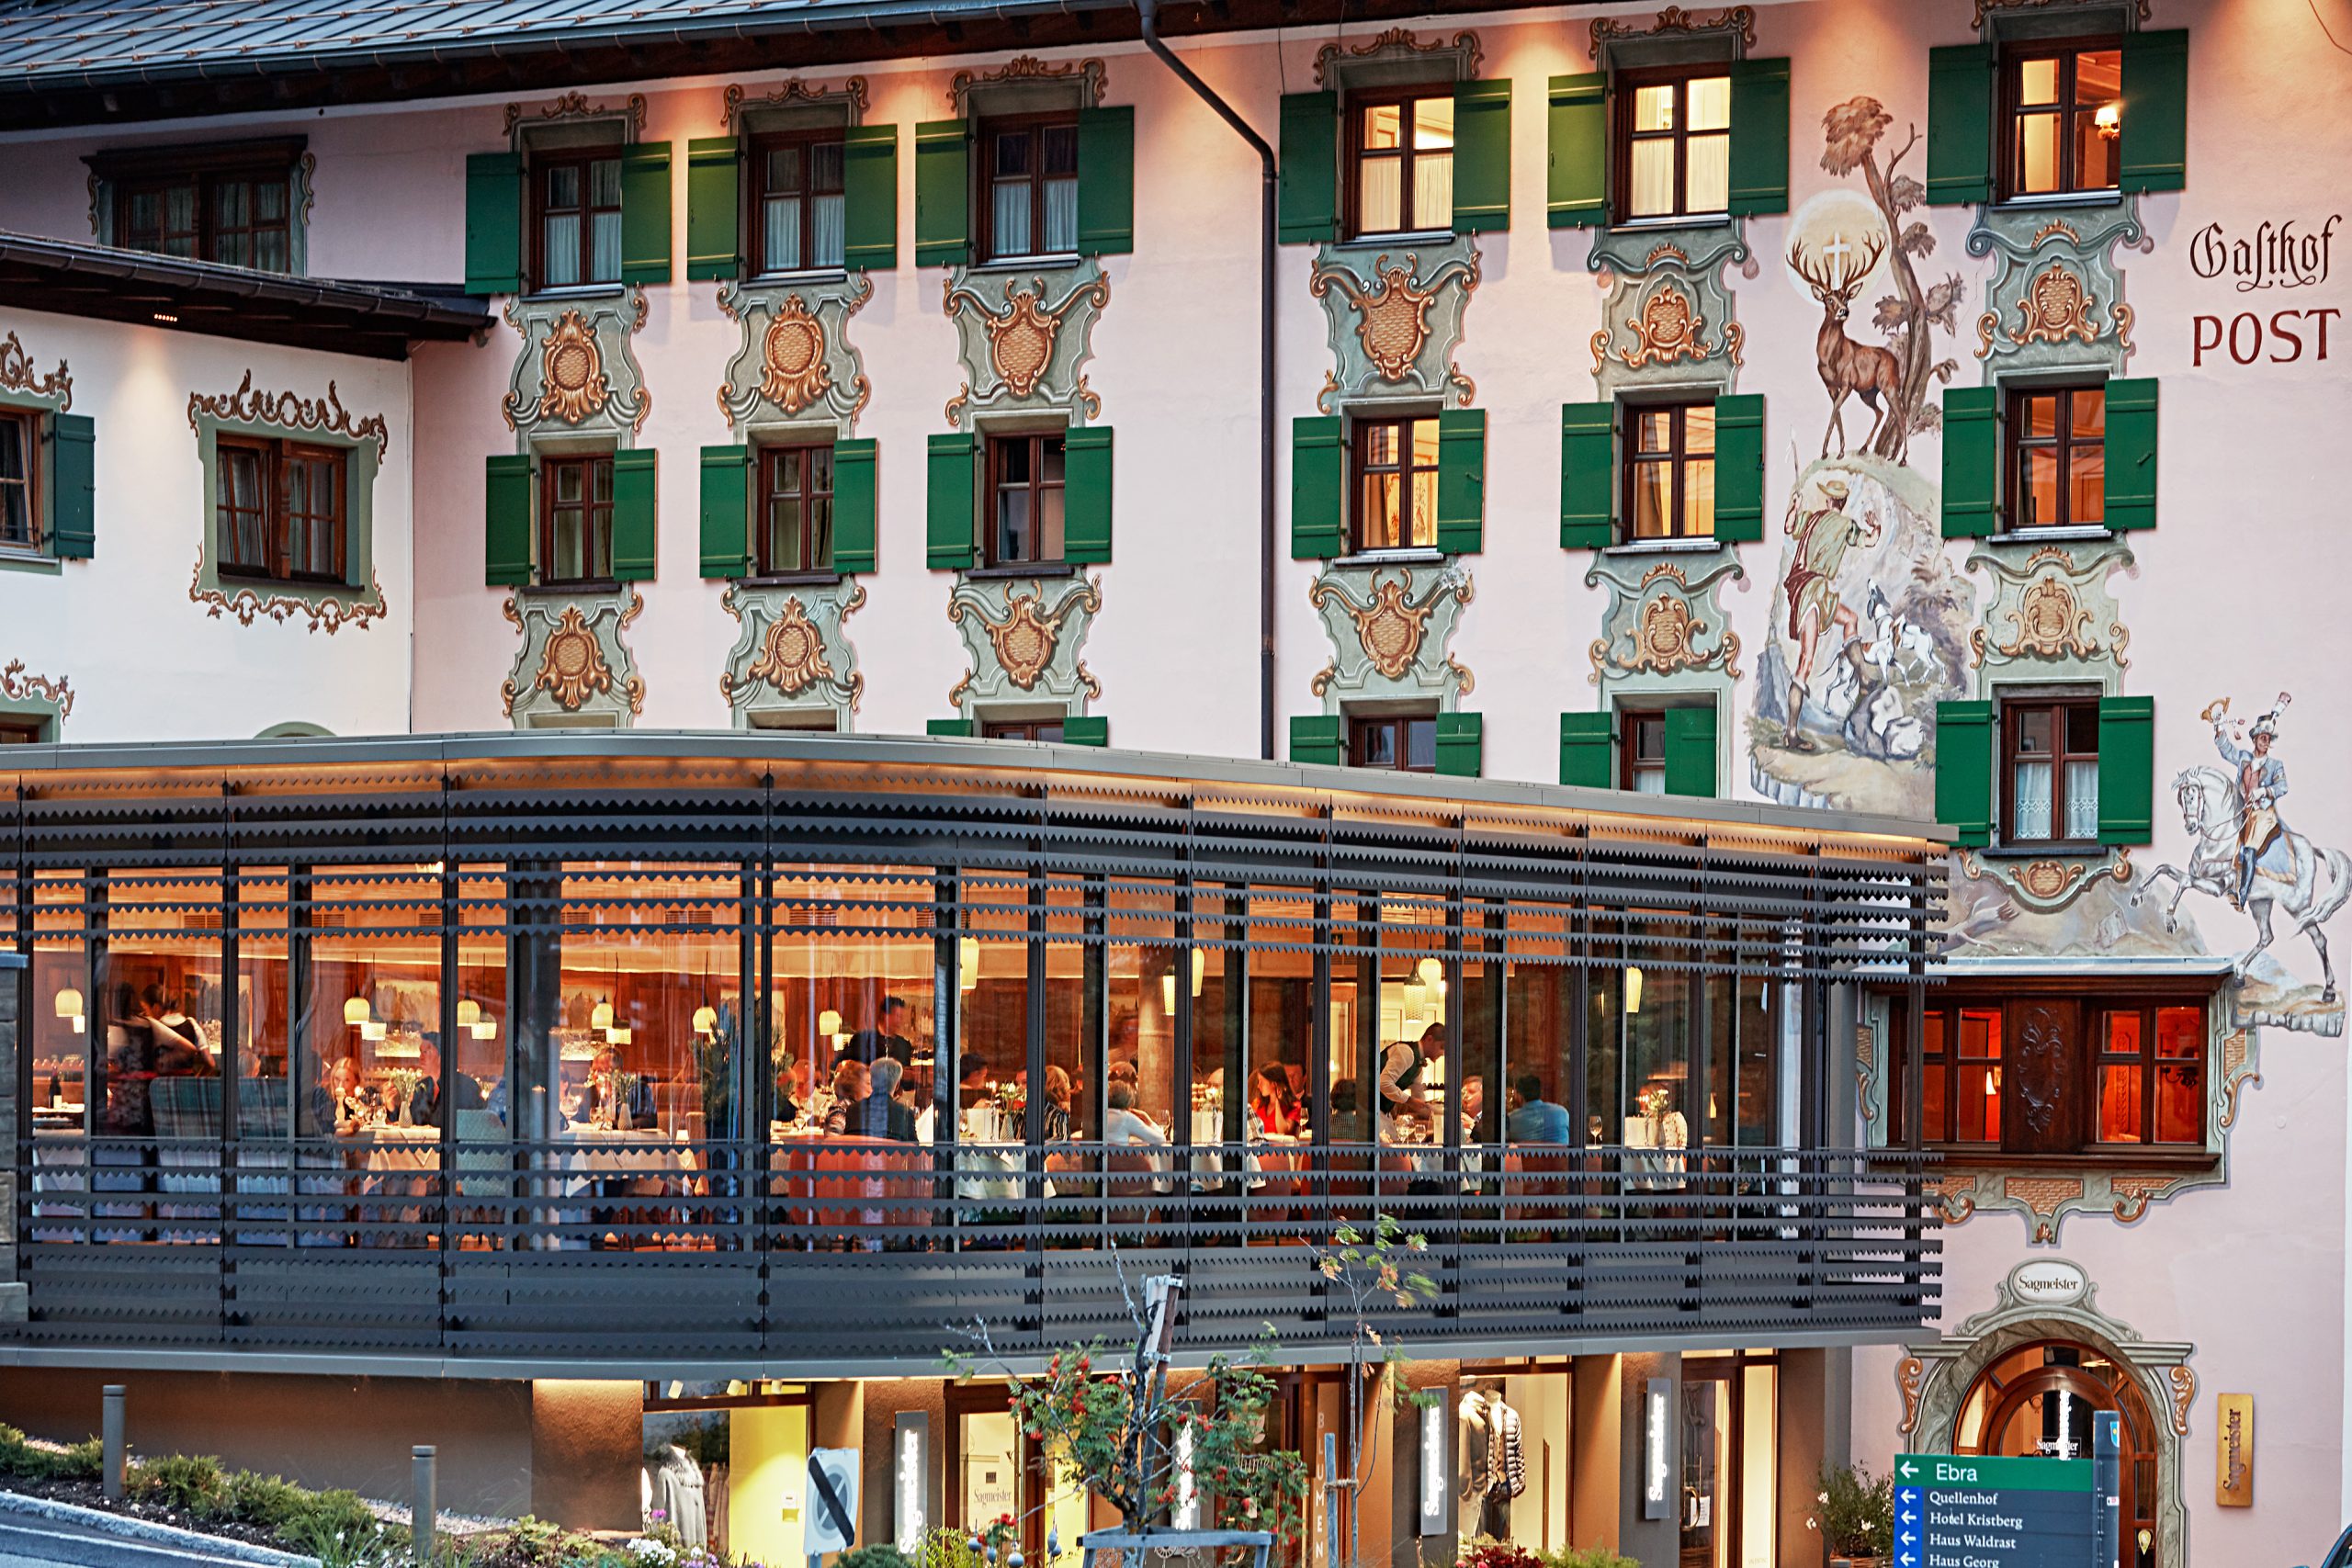 Hotel Gasthof Post, Fam. Moosbrugger, Lech am Arlberg, Österreich